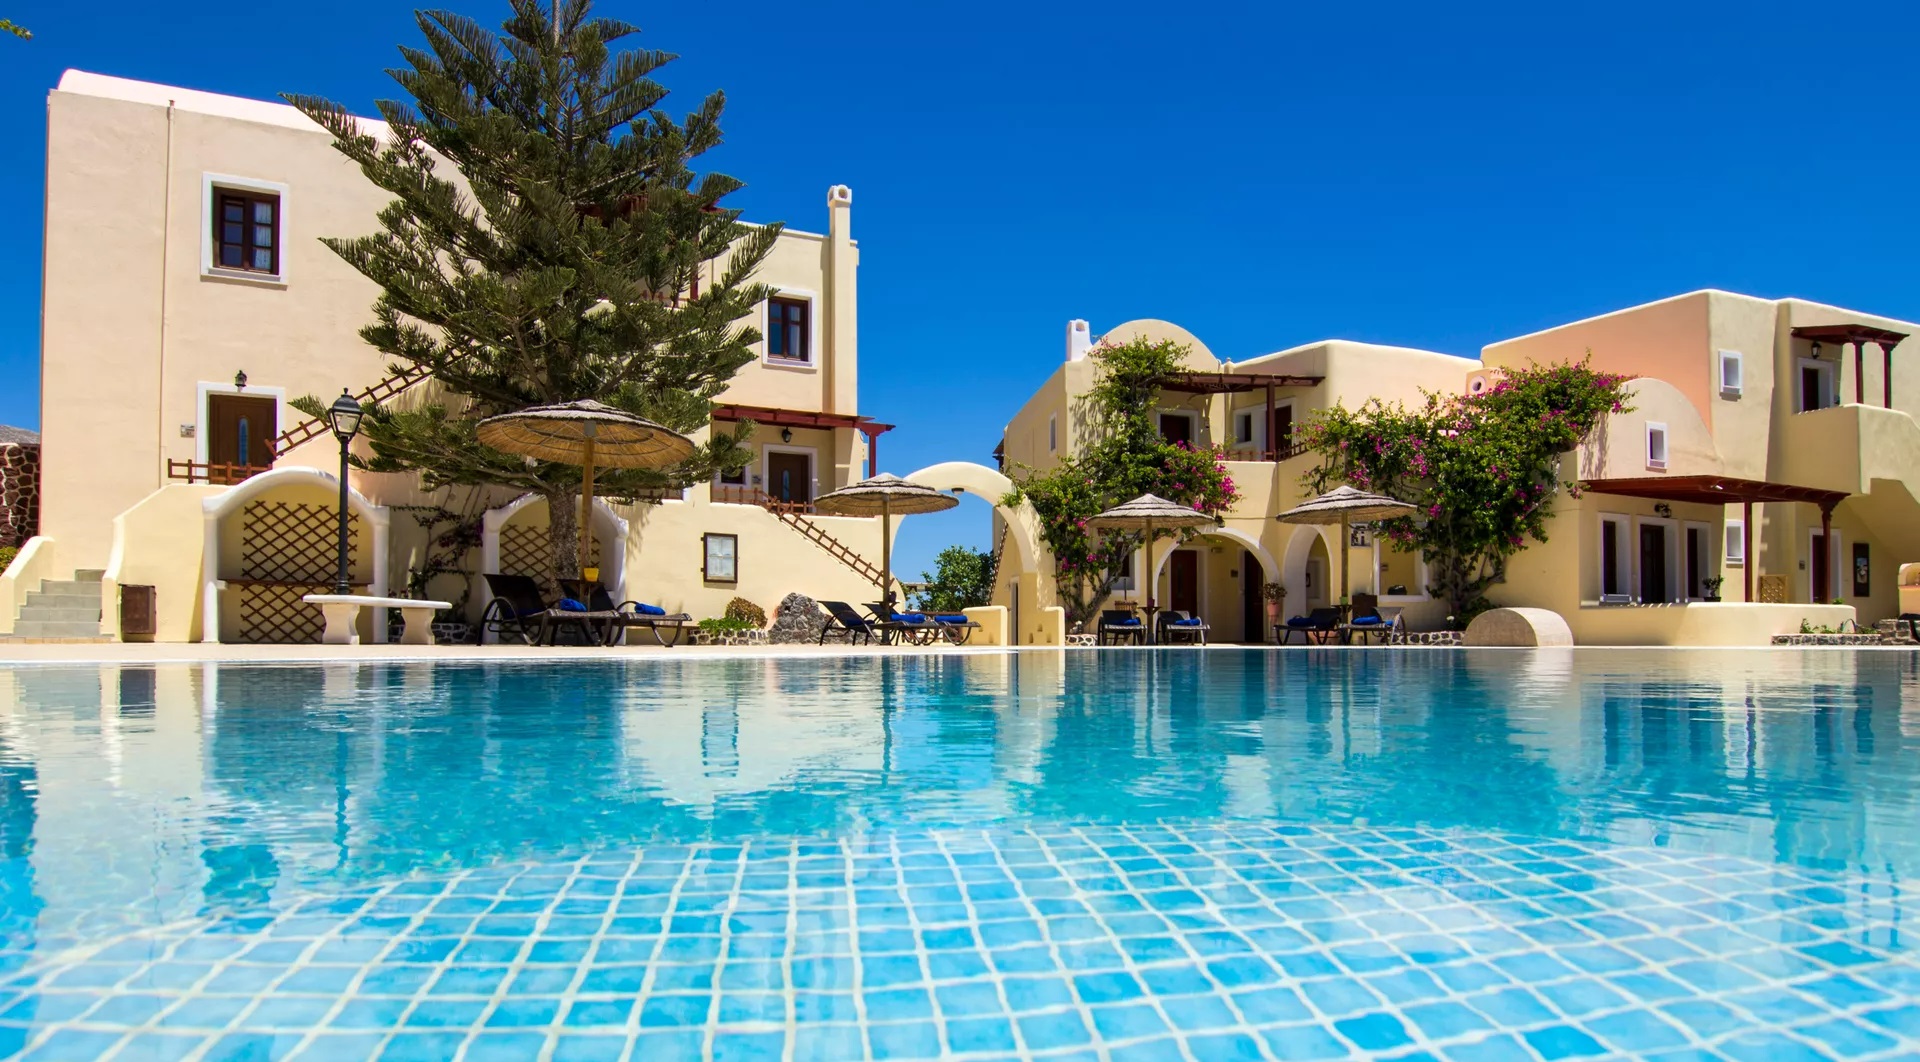 Smaragdi Hotel - Περίβολος, Σαντορίνη ✦ 2 Ημέρες (1 Διανυκτέρευση) ✦ 2 άτομα ✦ 1 ✦ έως 30/09/2022 ✦ Κοντά στην παραλία!